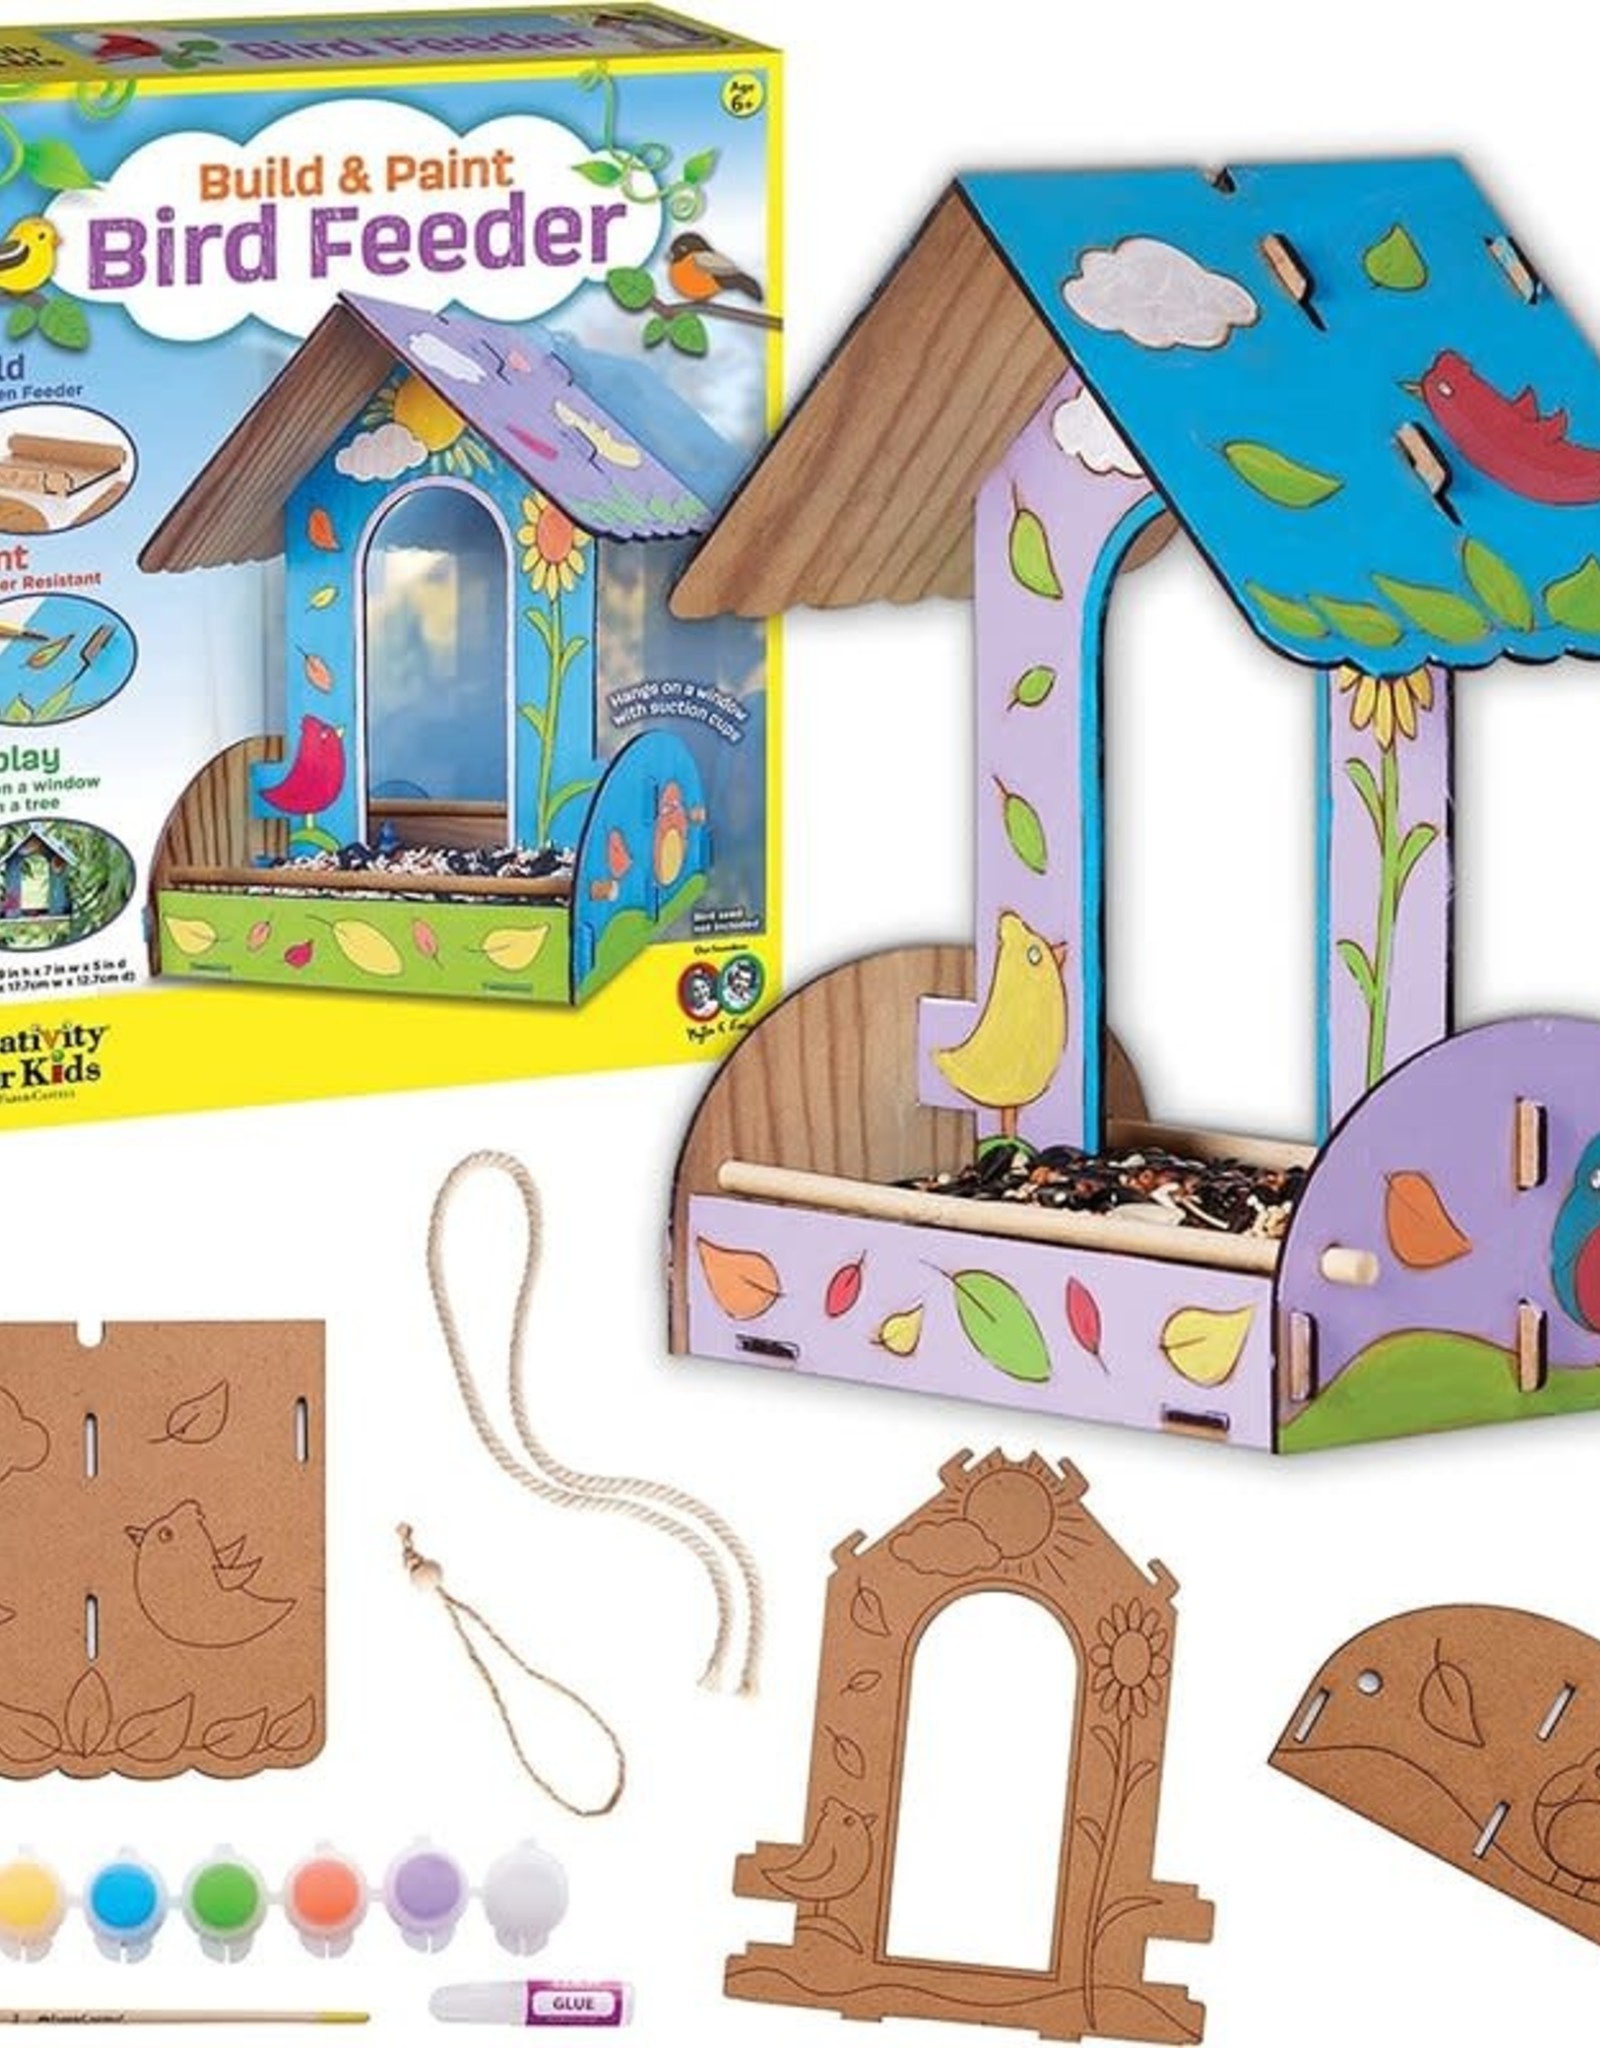 Creativity For Kids Build & Paint Bird Feeder